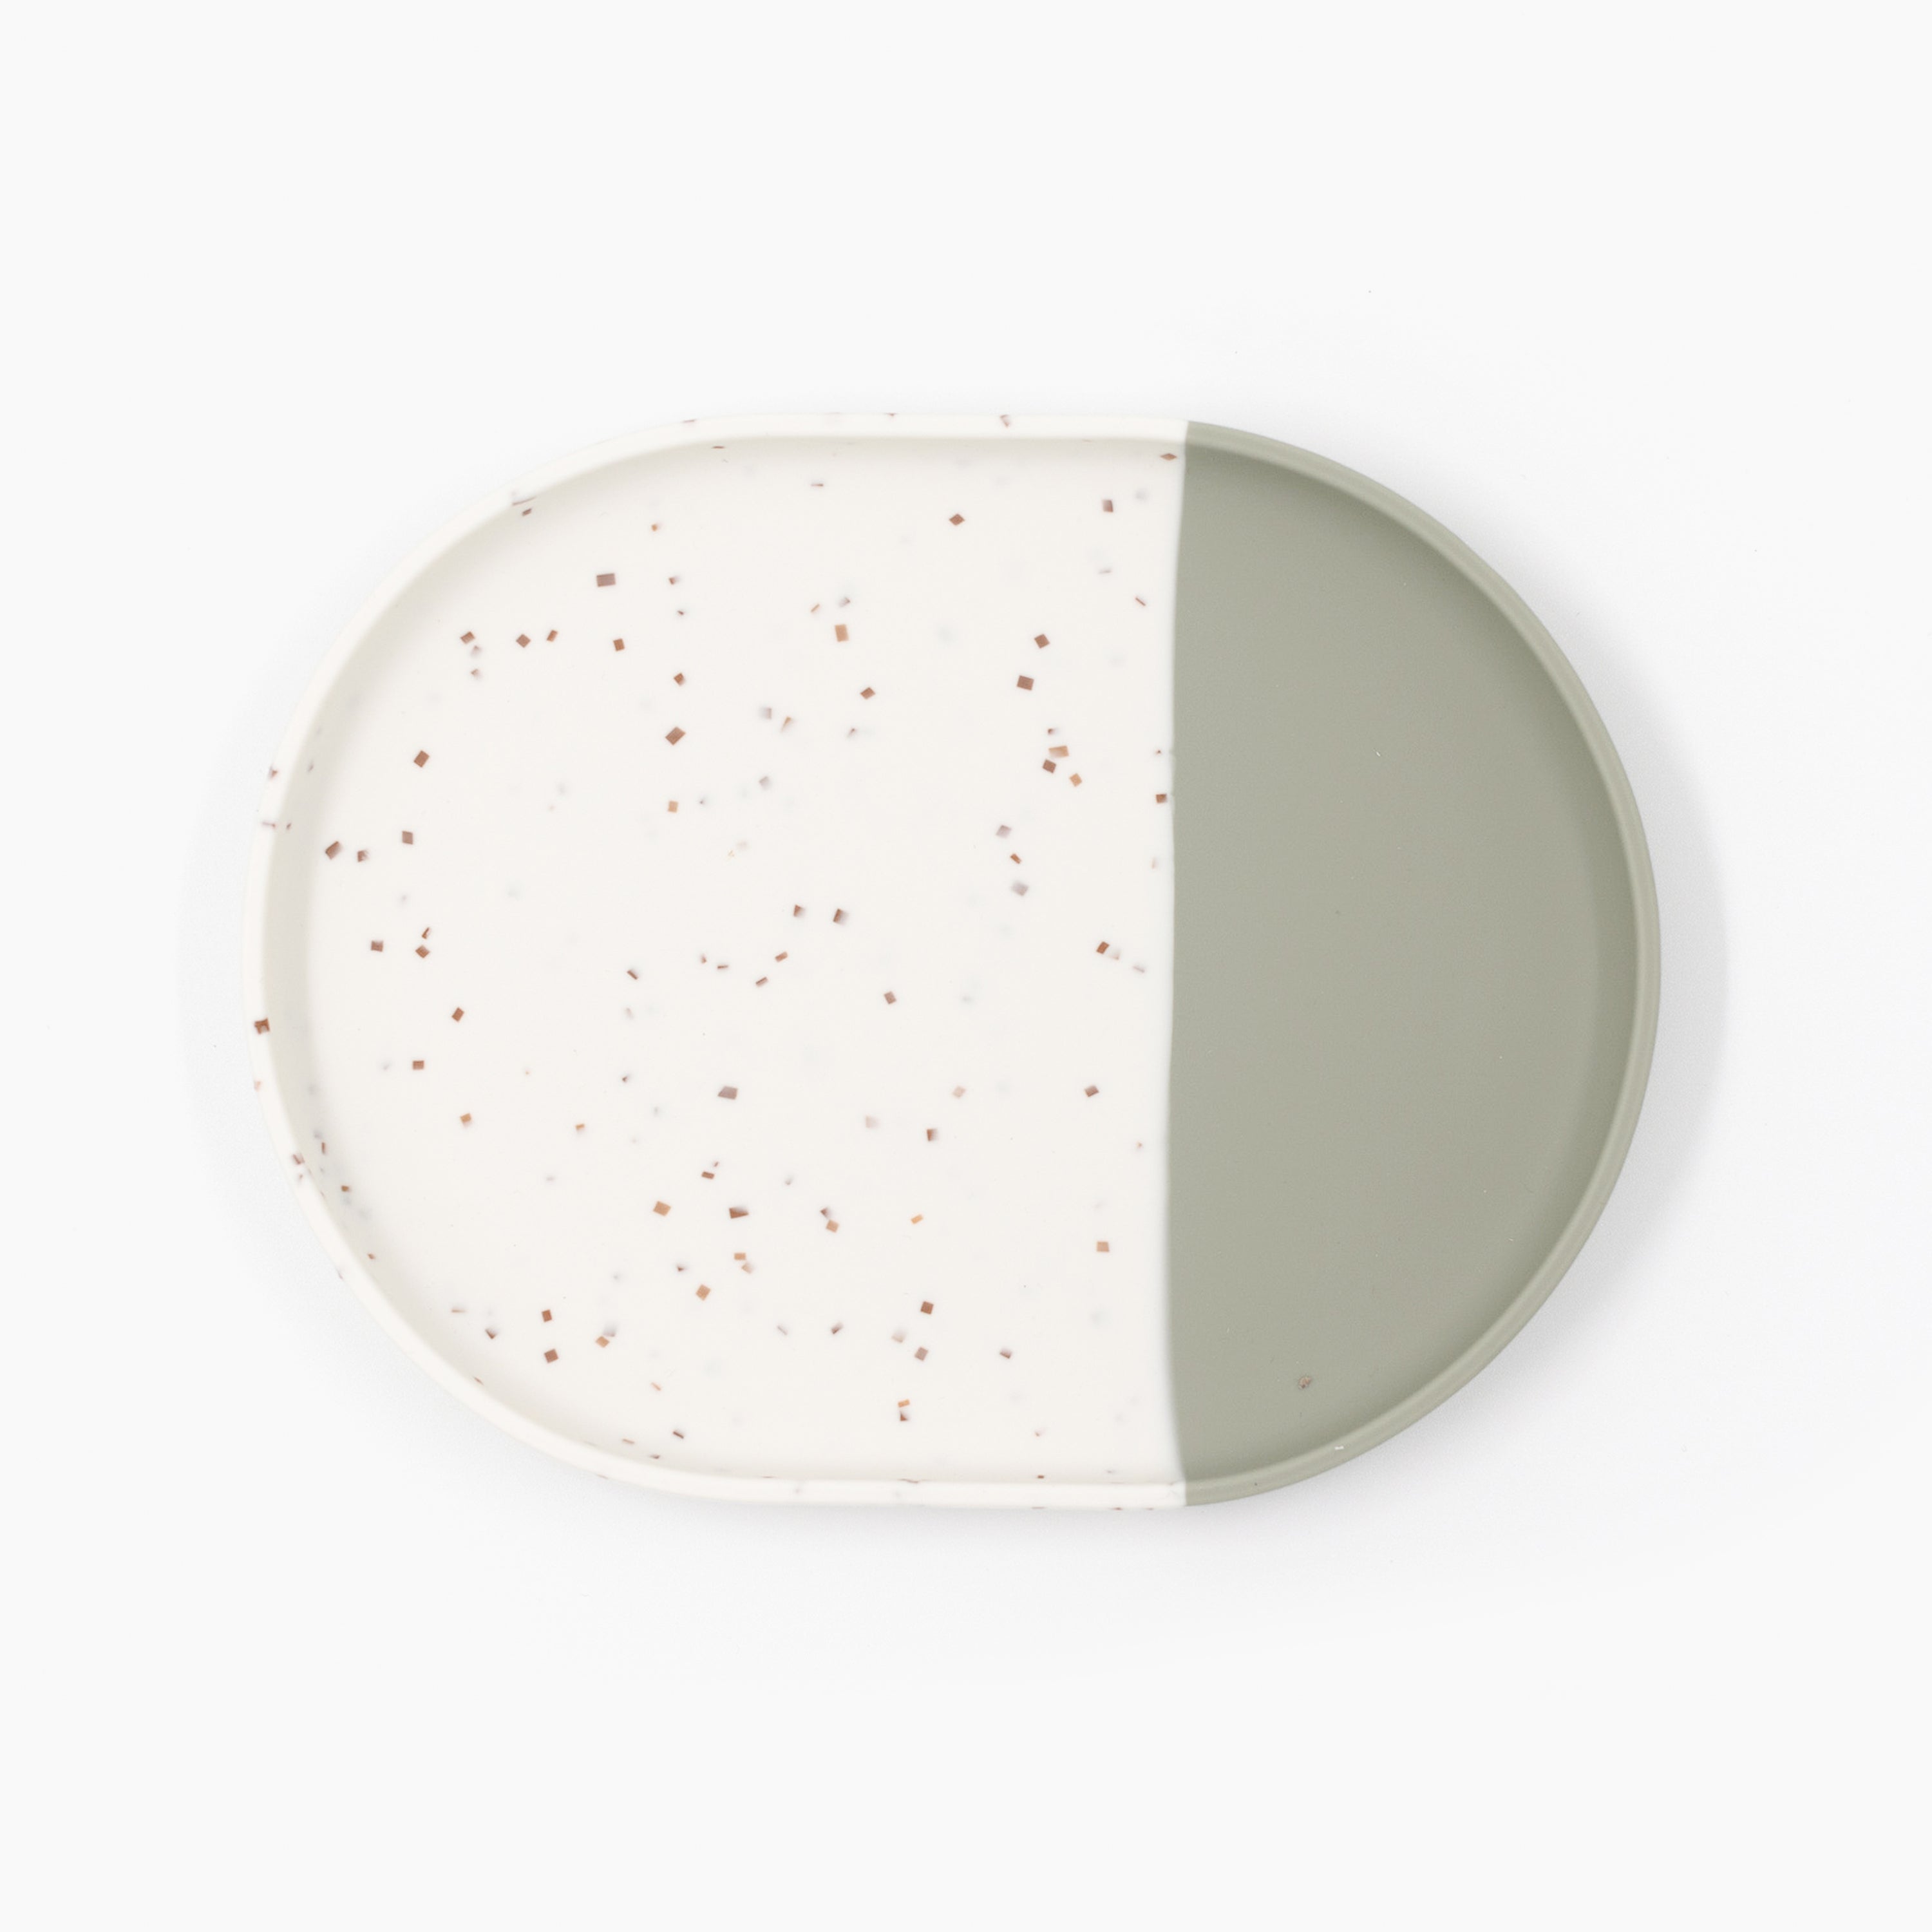 Silicone Plate - Desert Sage/Brown Speckle